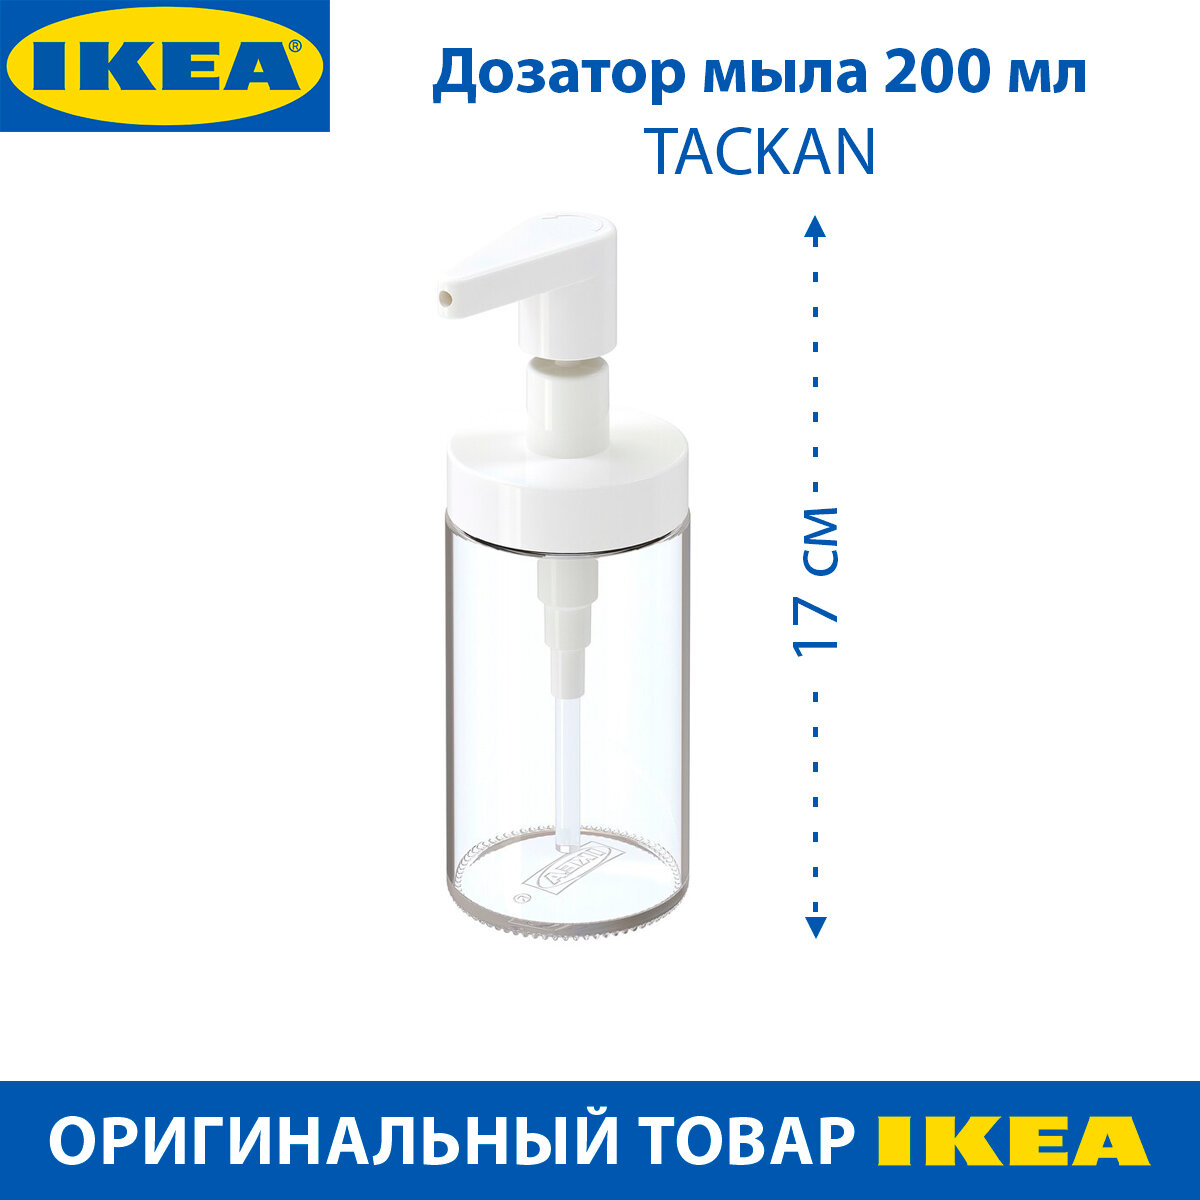 Дозатор мыла IKEA TACKAN (такан), белый, 200 мл, 1 шт